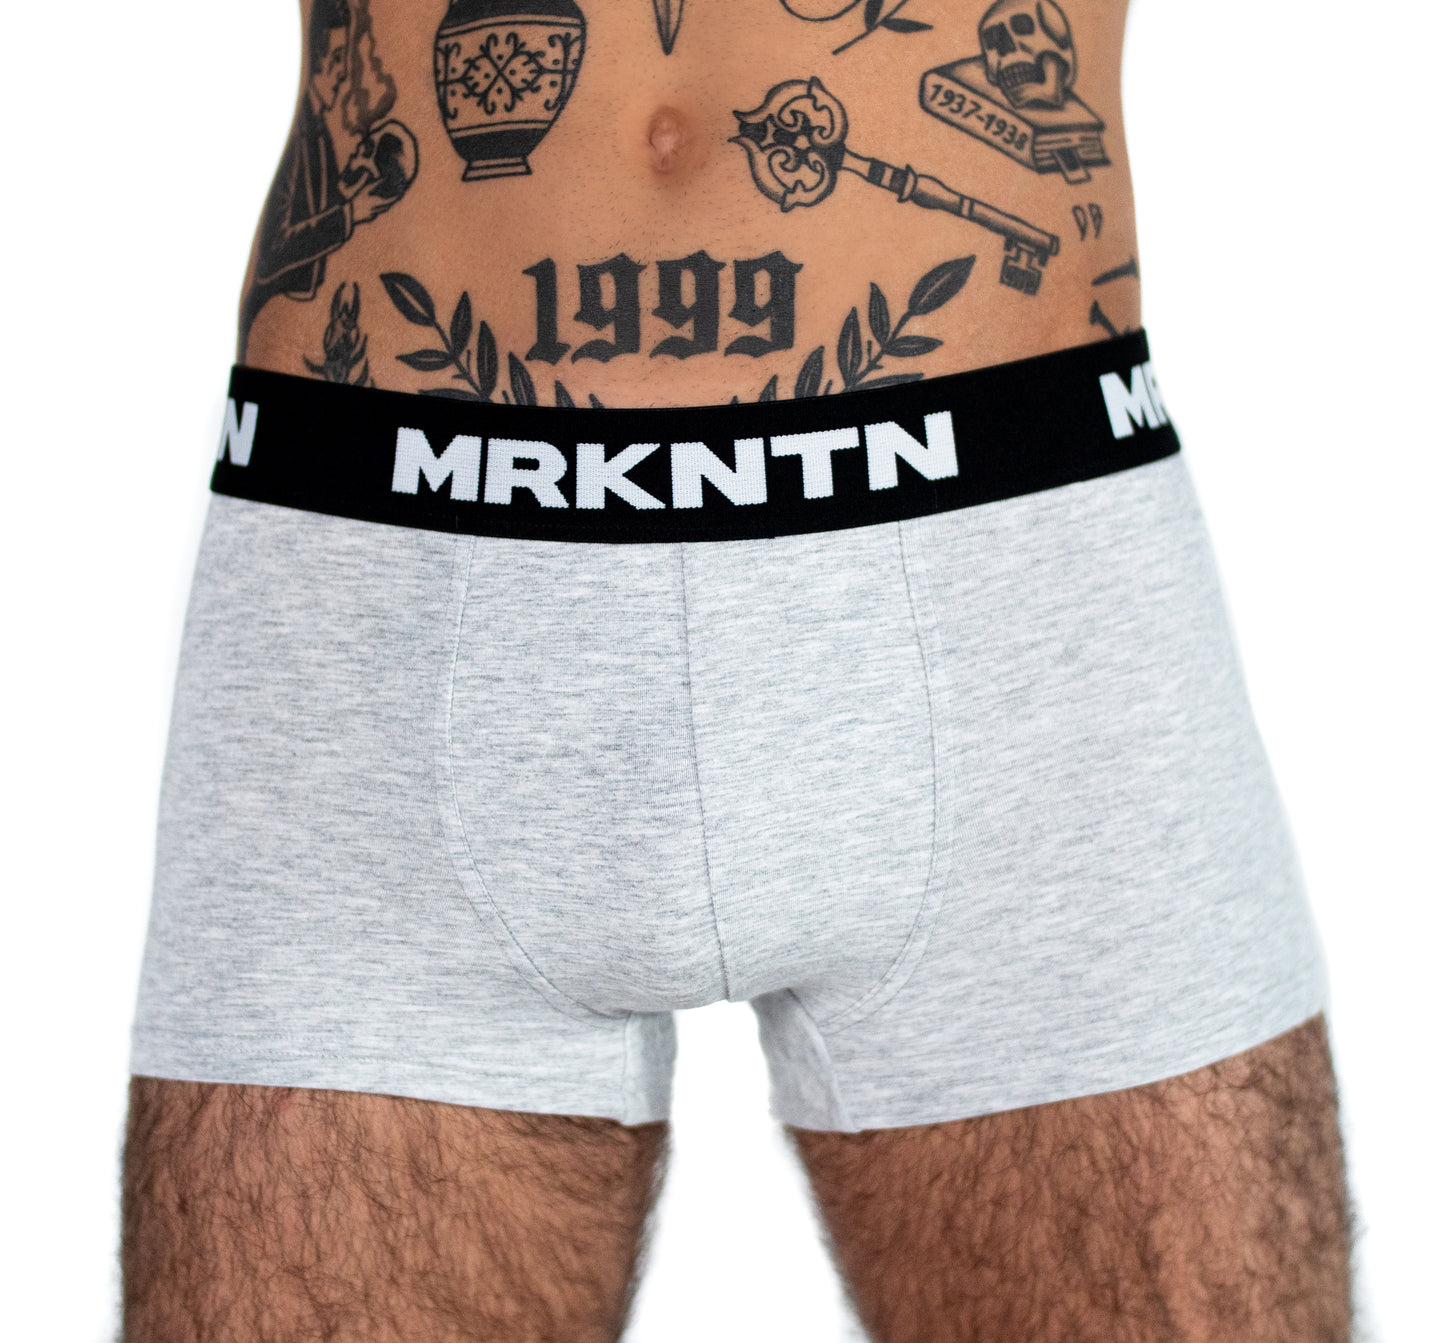 MRKNTN classic boxers